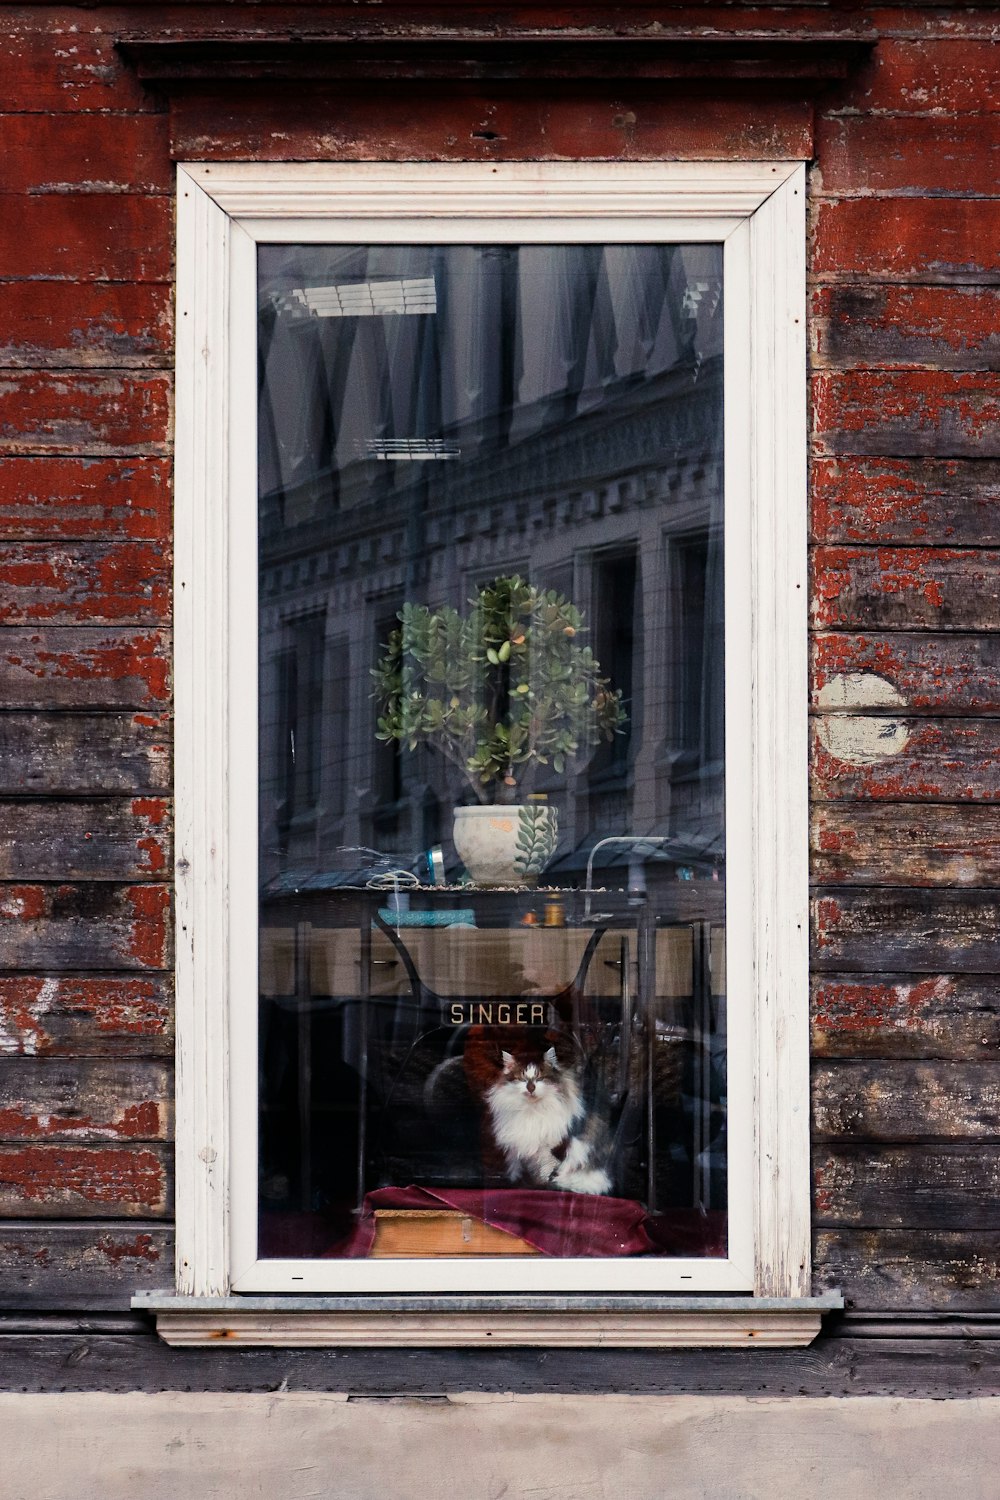 a cat is sitting in a window sill